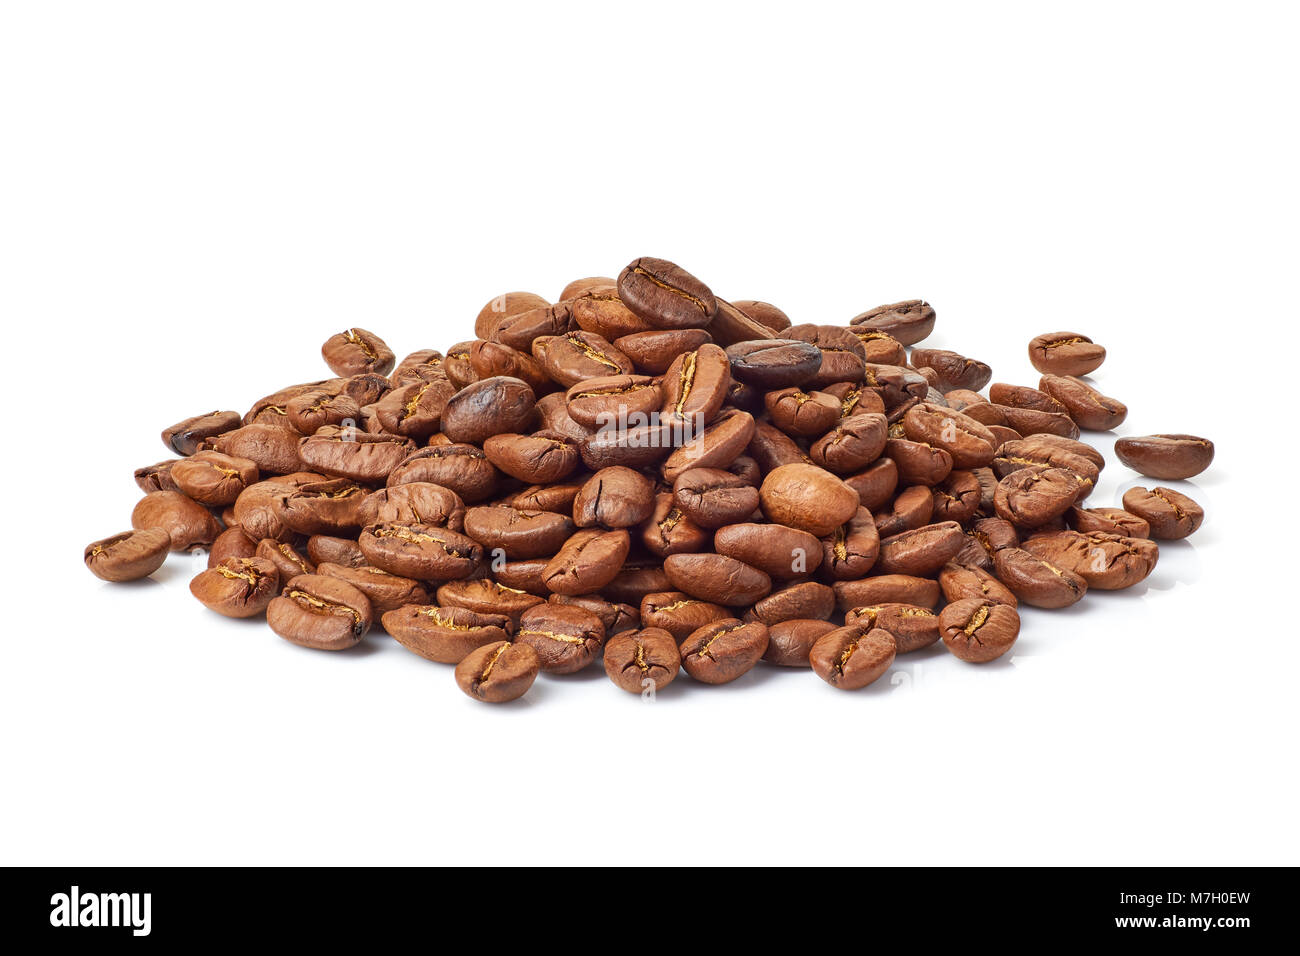 Heap of coffee beans on white Stock Photo